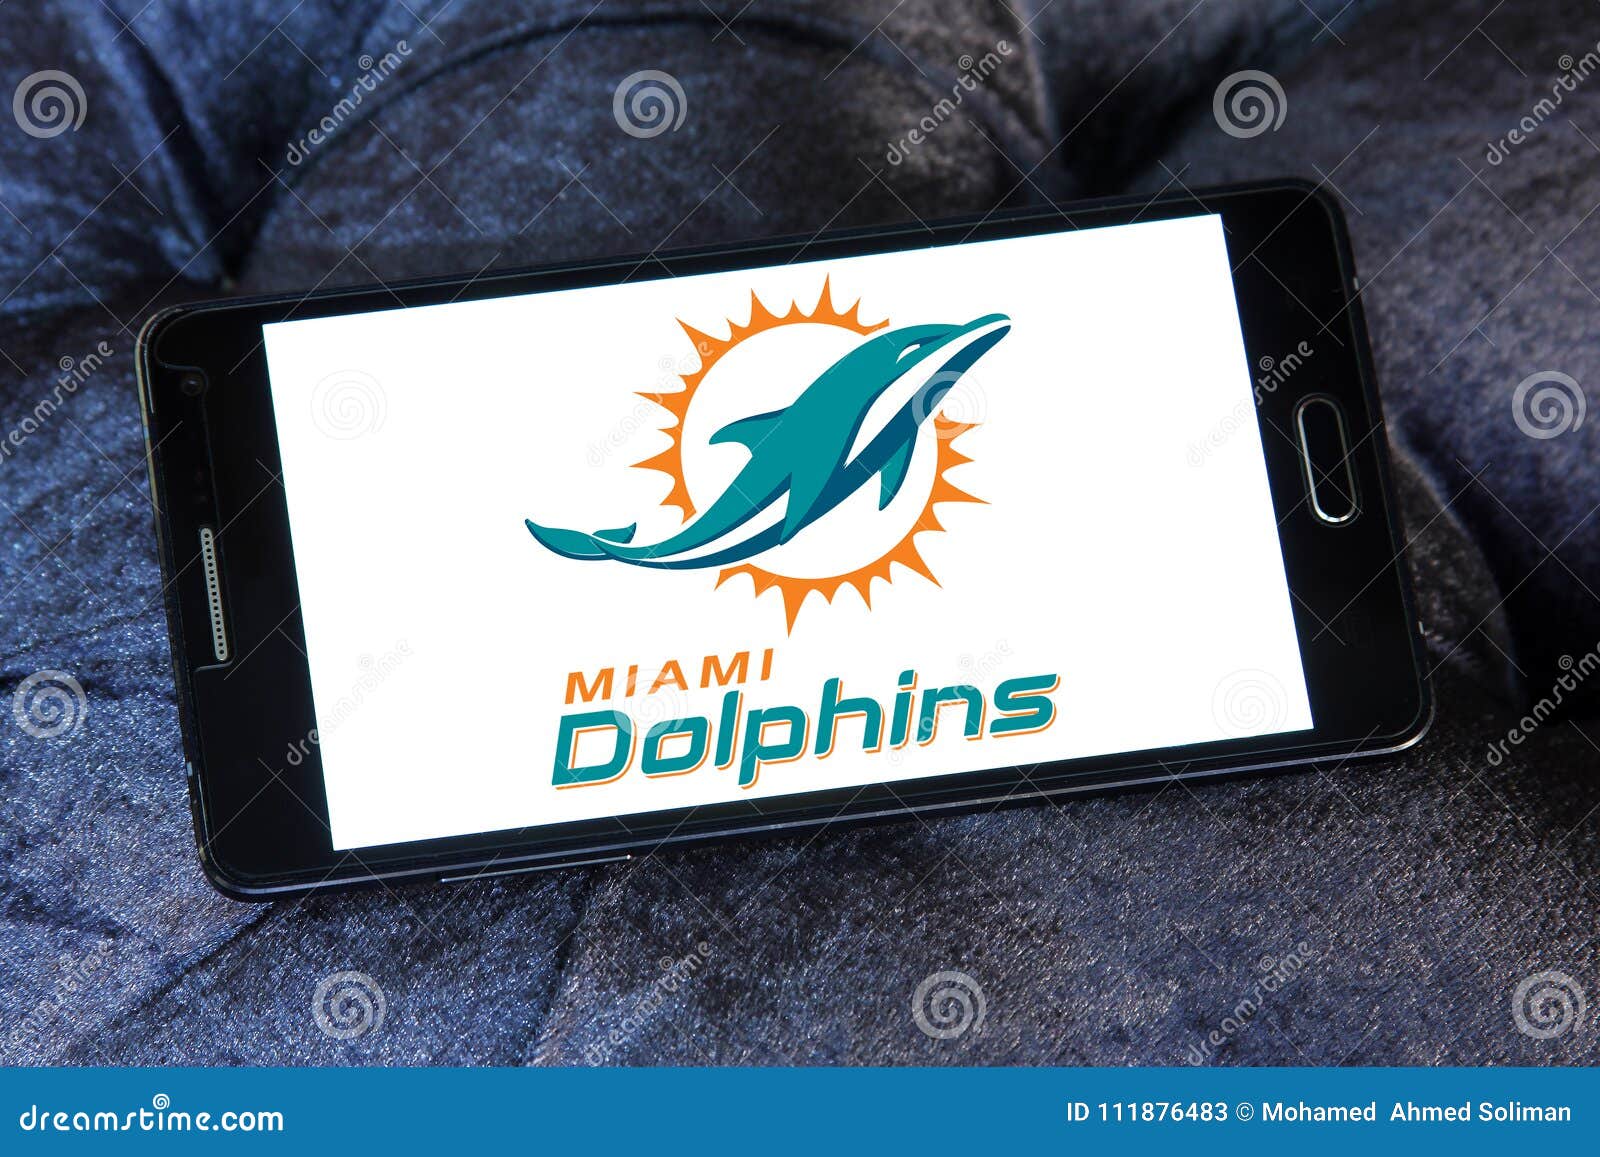 miami dolphins background